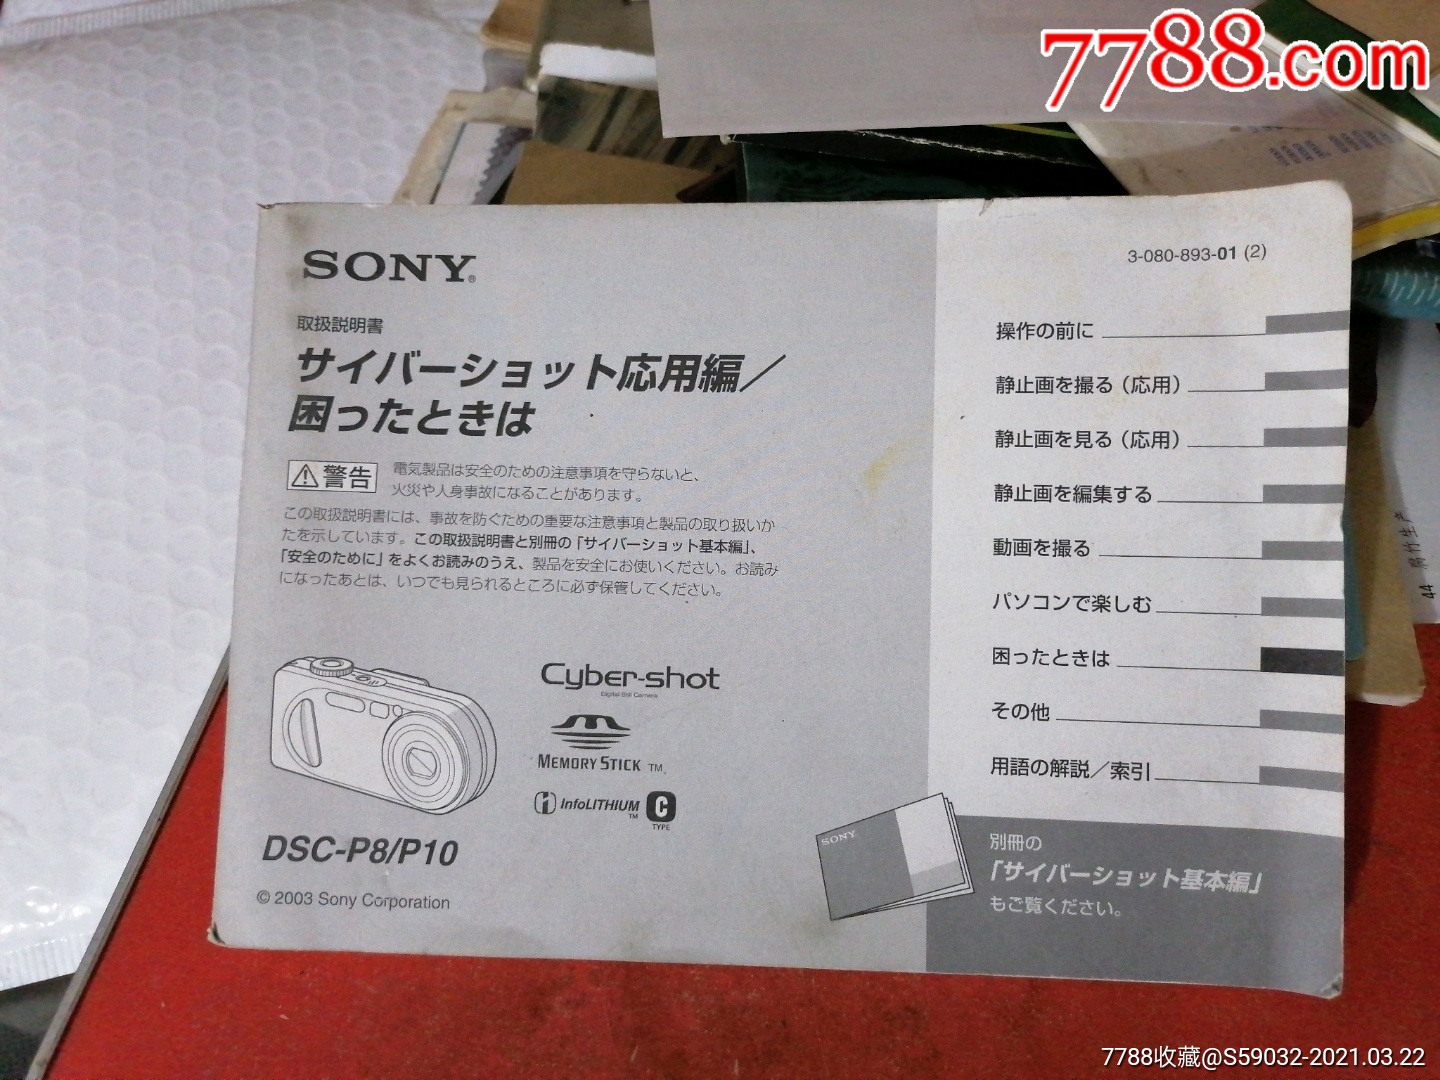 sony照相机说明书(dsc一p8/p10)日文版